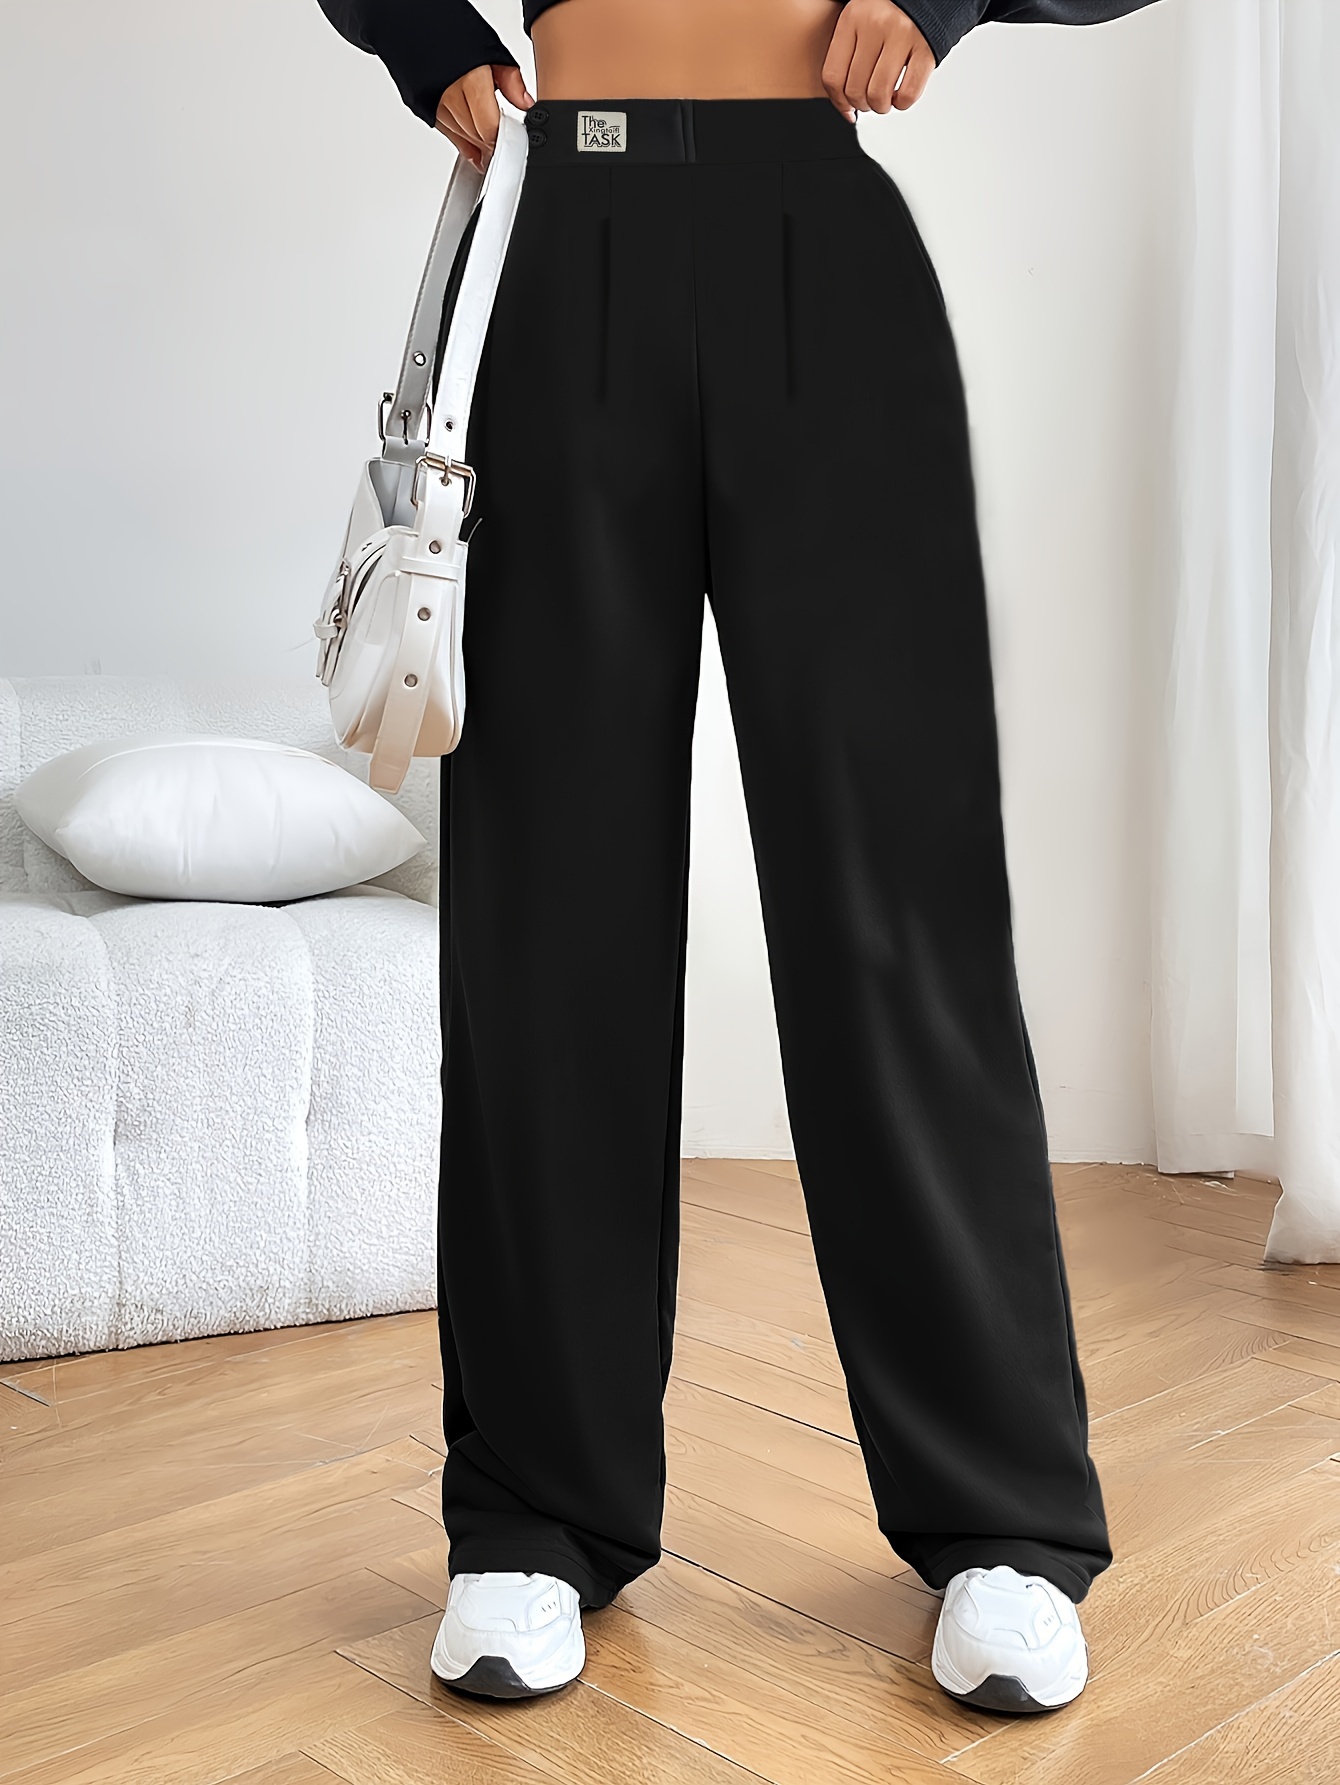 Tennis Button Pants, Women's Black Track Pants